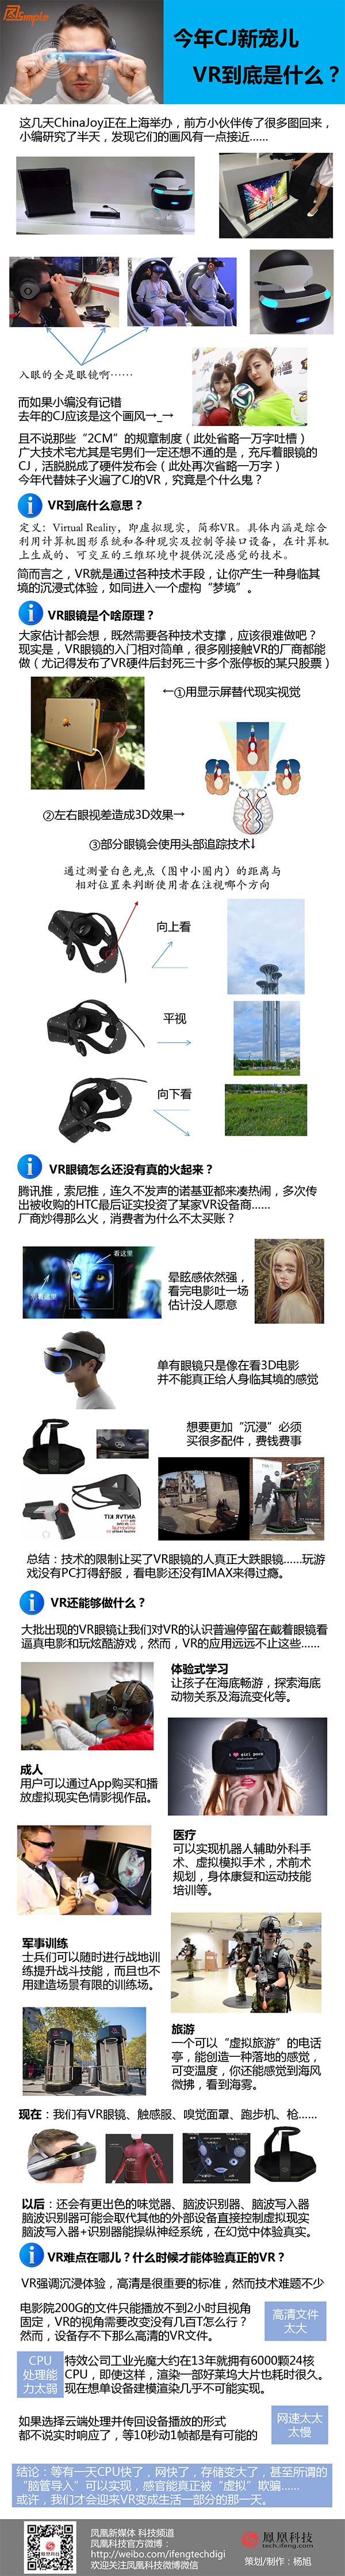 VR到底是个什么鬼